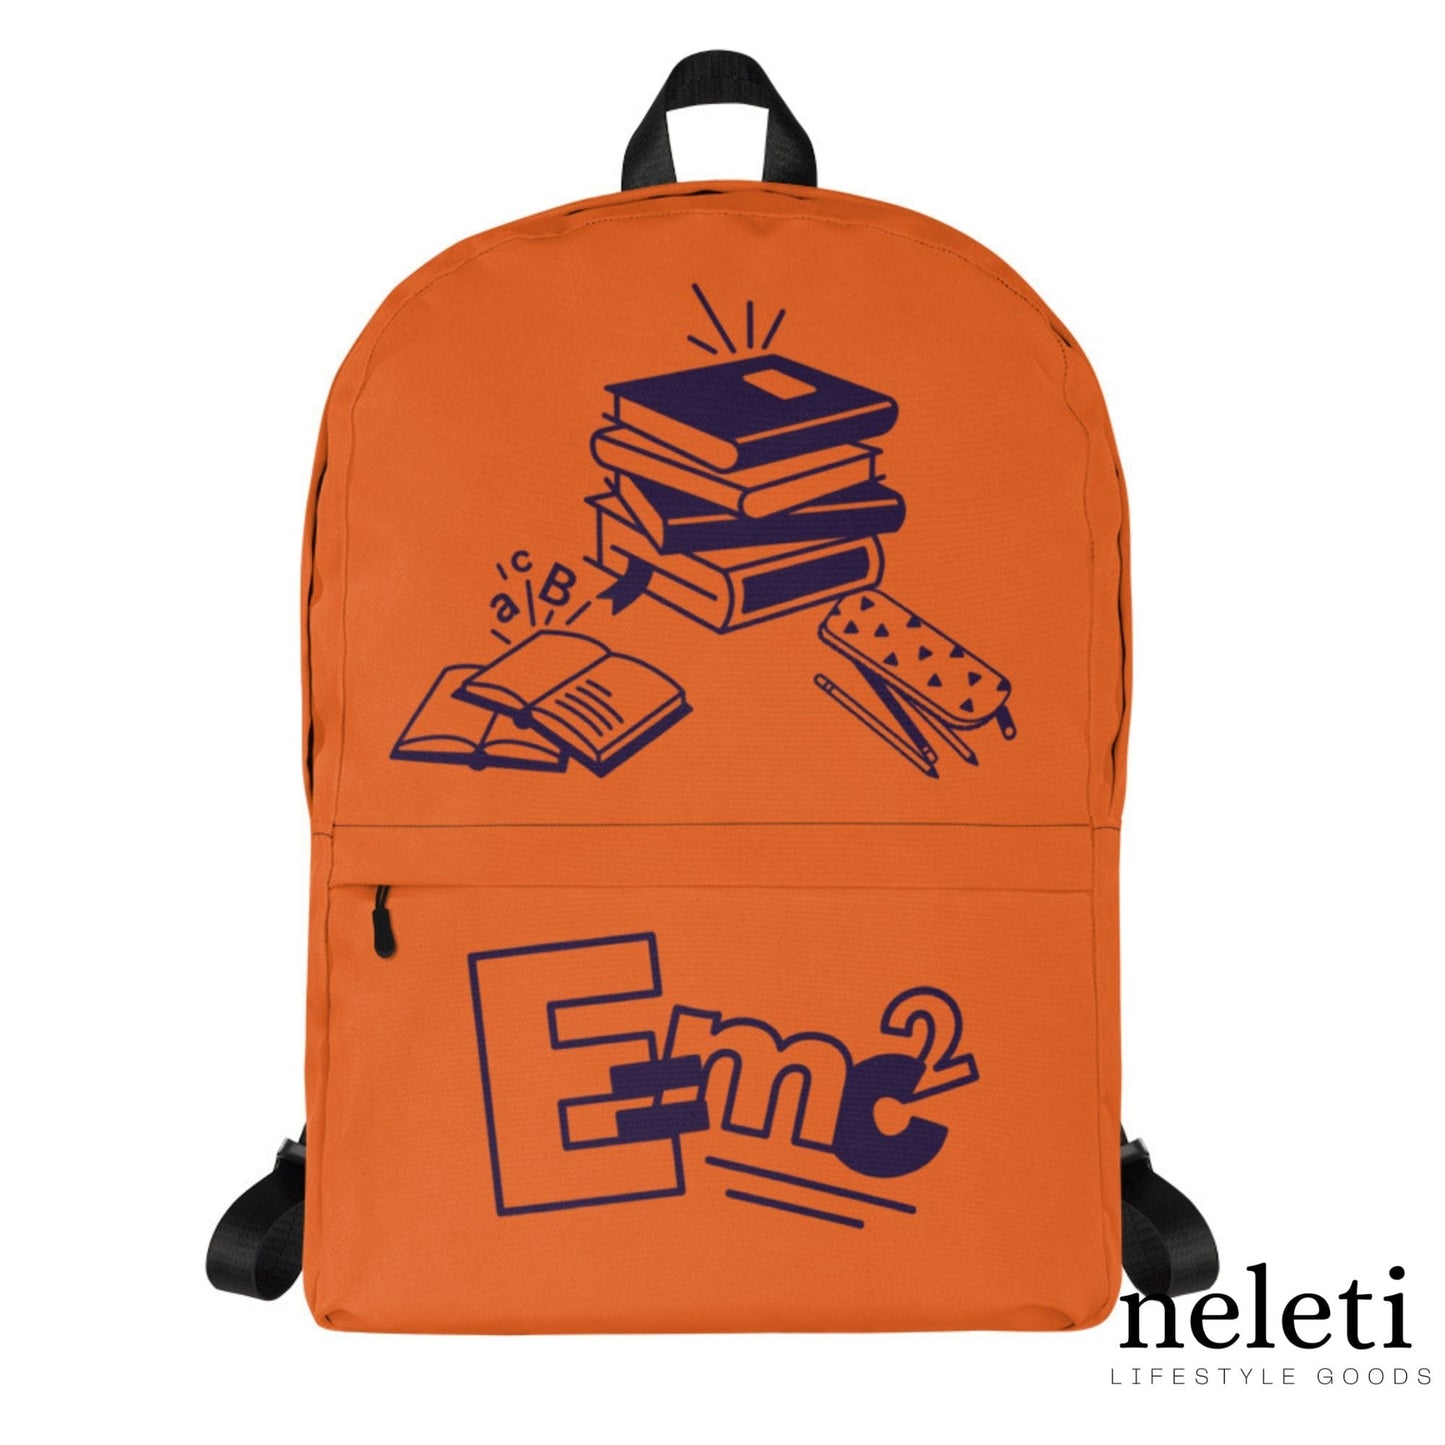 neleti.com-orange-backpacks-for-students